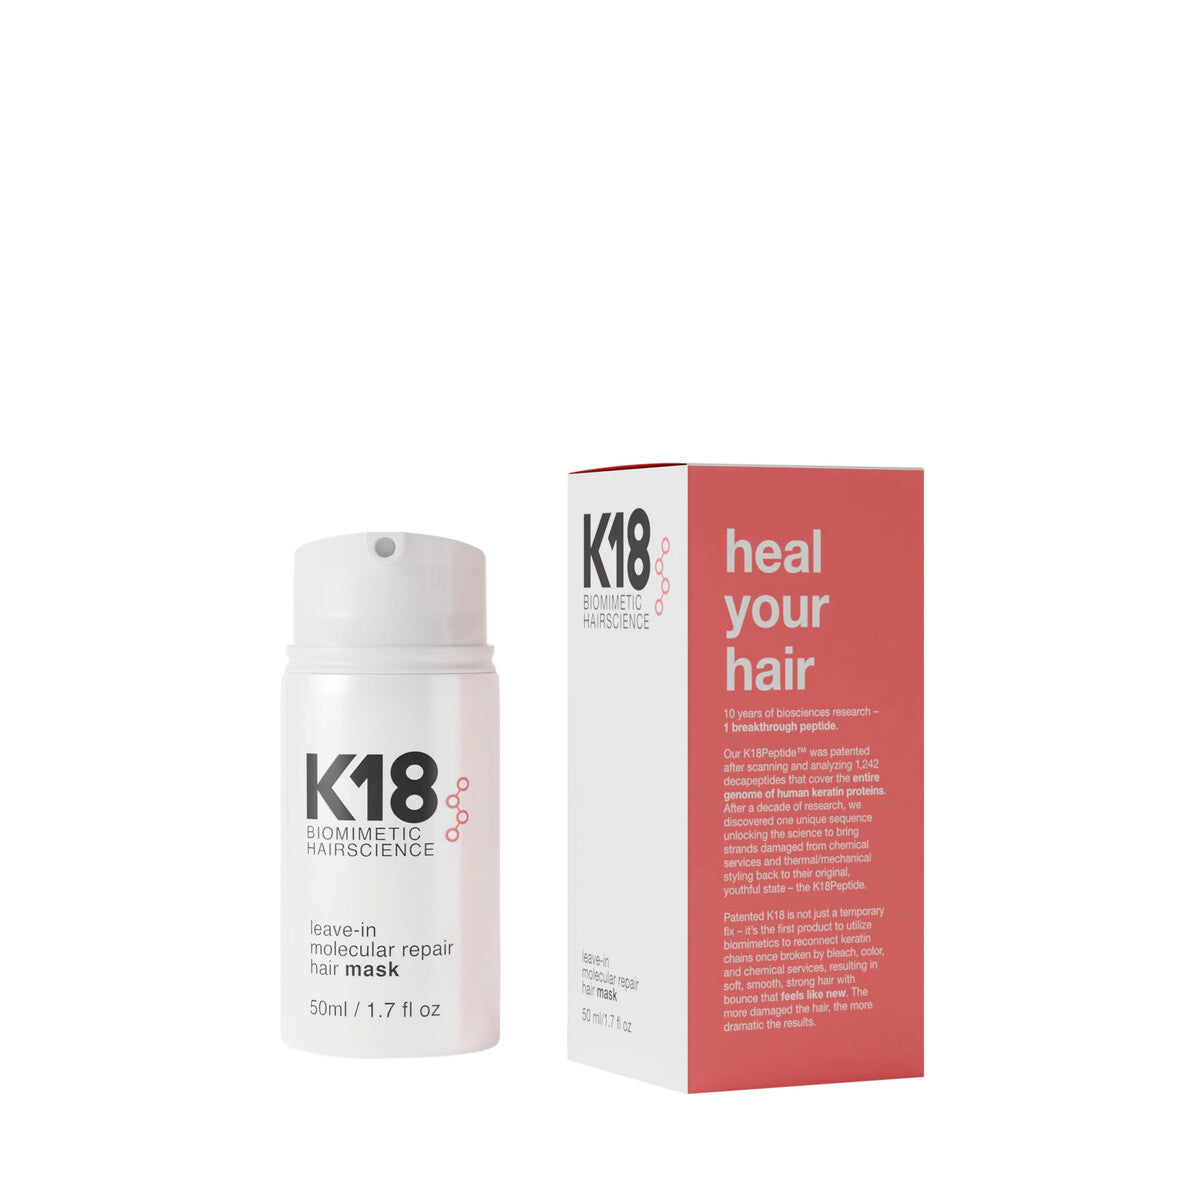 K18Hair Leave-in Molecular Repair Mask 50ml